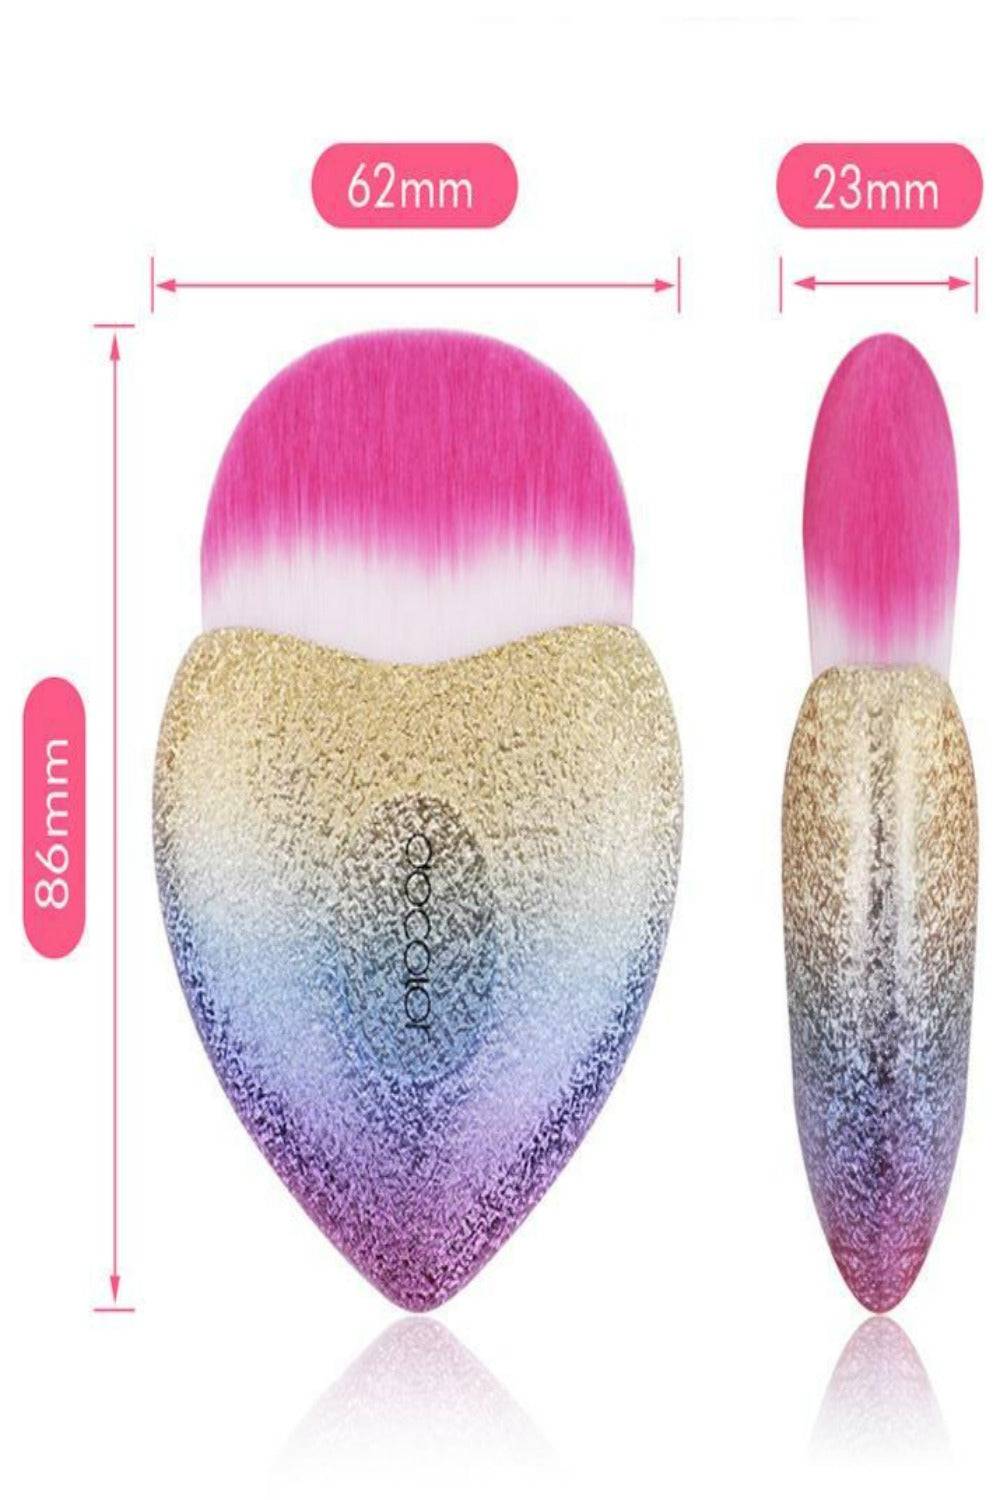 Rainbow Heart Brush Kit - TGC Boutique - Makeup Brushes